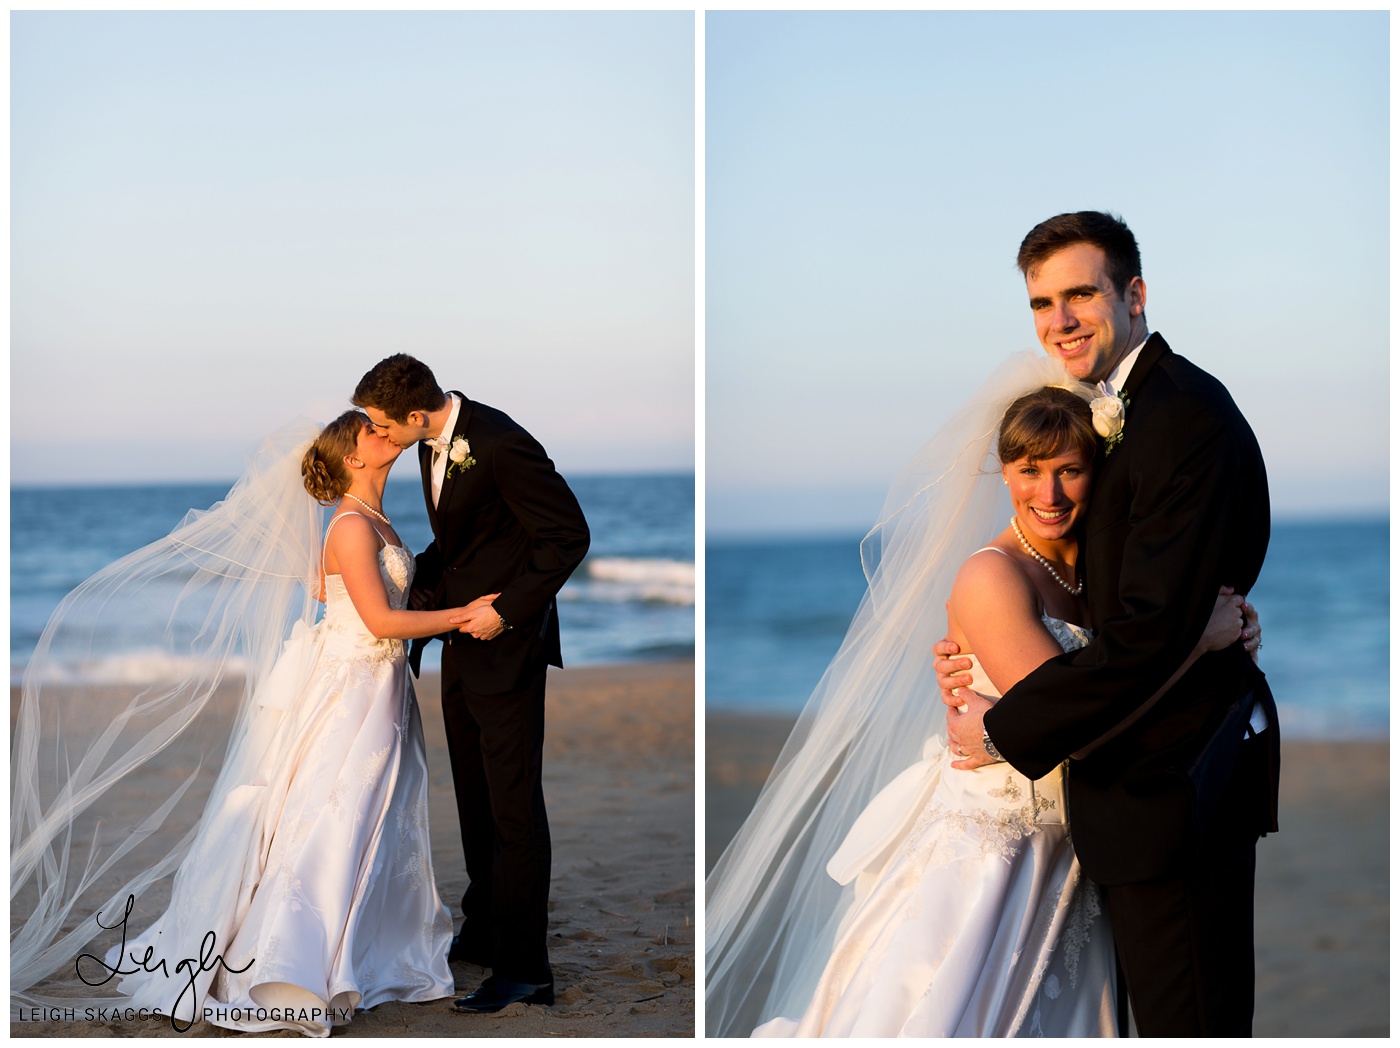 Colleen & David | Shifting Sands Wedding